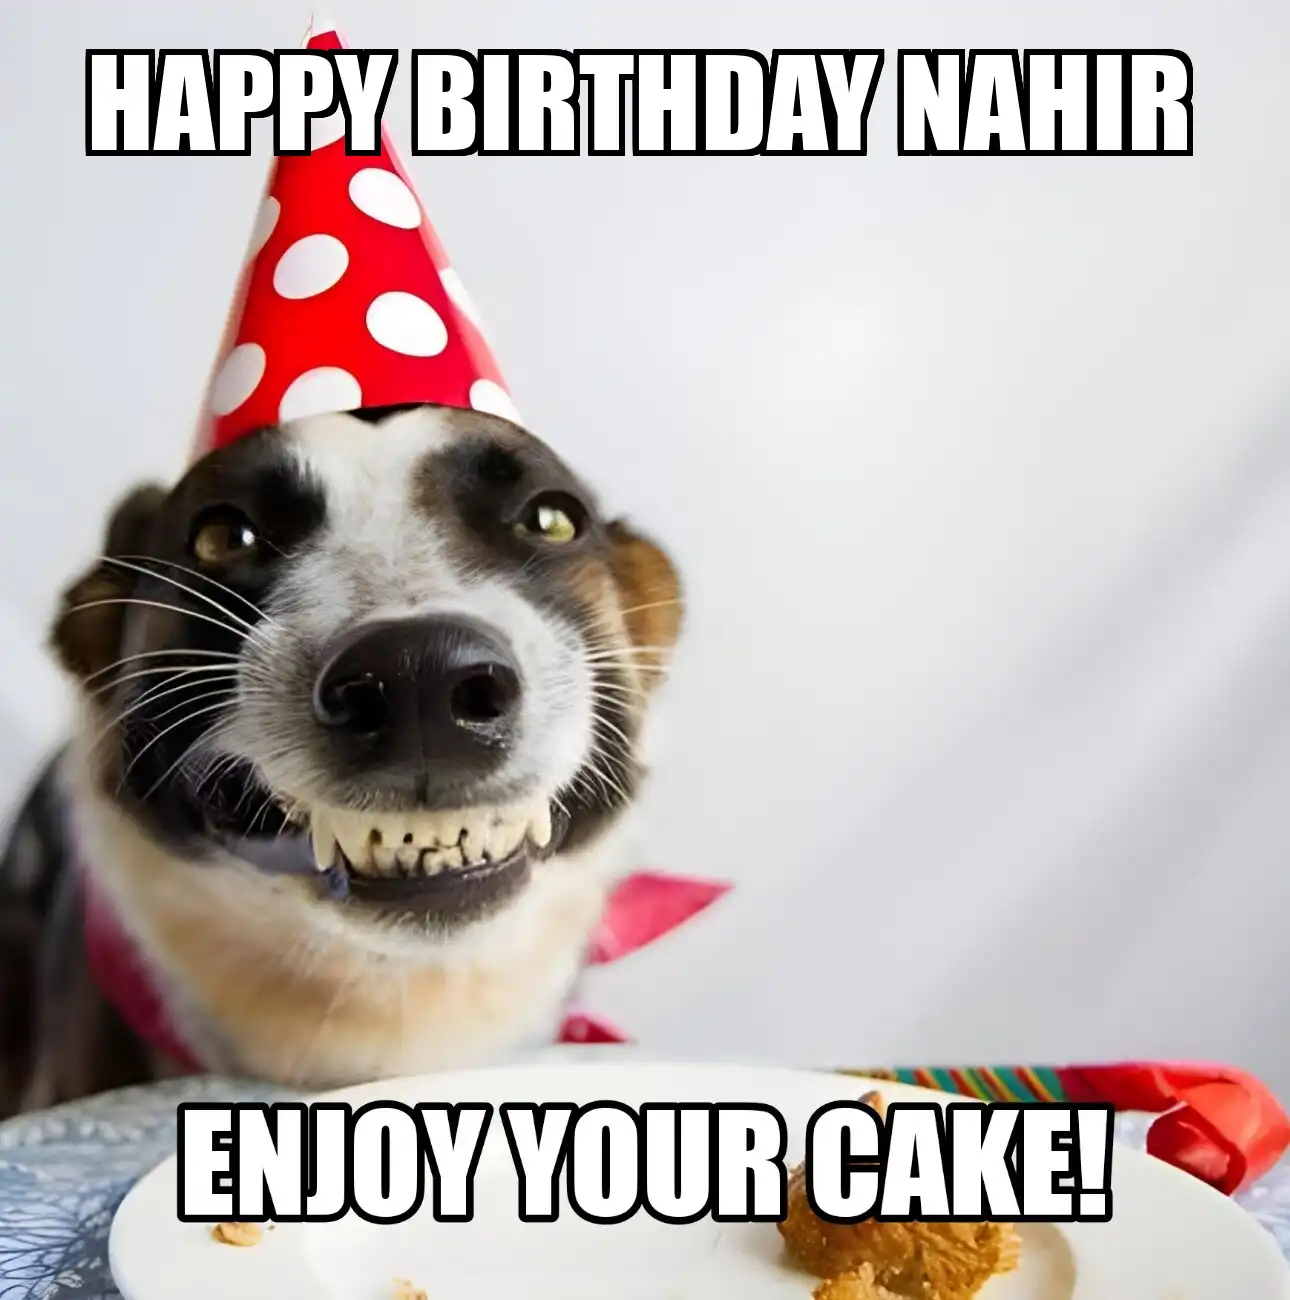 Happy Birthday Nahir Enjoy Your Cake Dog Meme